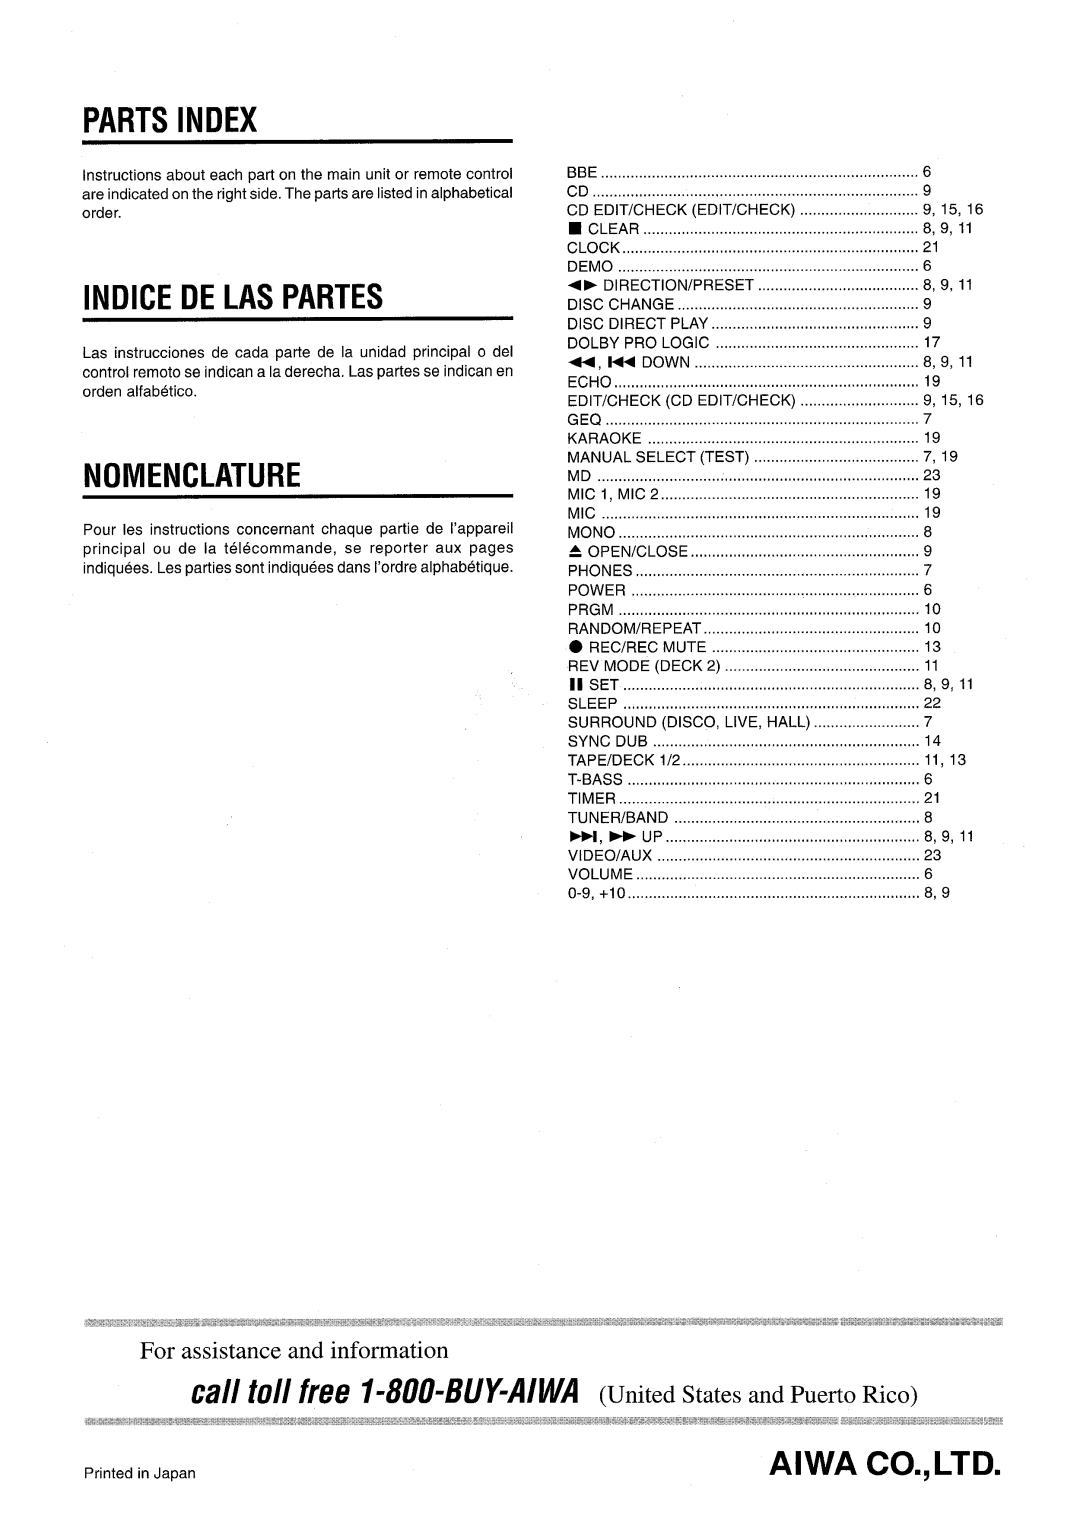 Aiwa CX-NMT50 Parts Index, Indice De Las Partes, Nomenclature, C~// ~0// fll?e l-80&6ukA/wA United States and Puerto Rico 